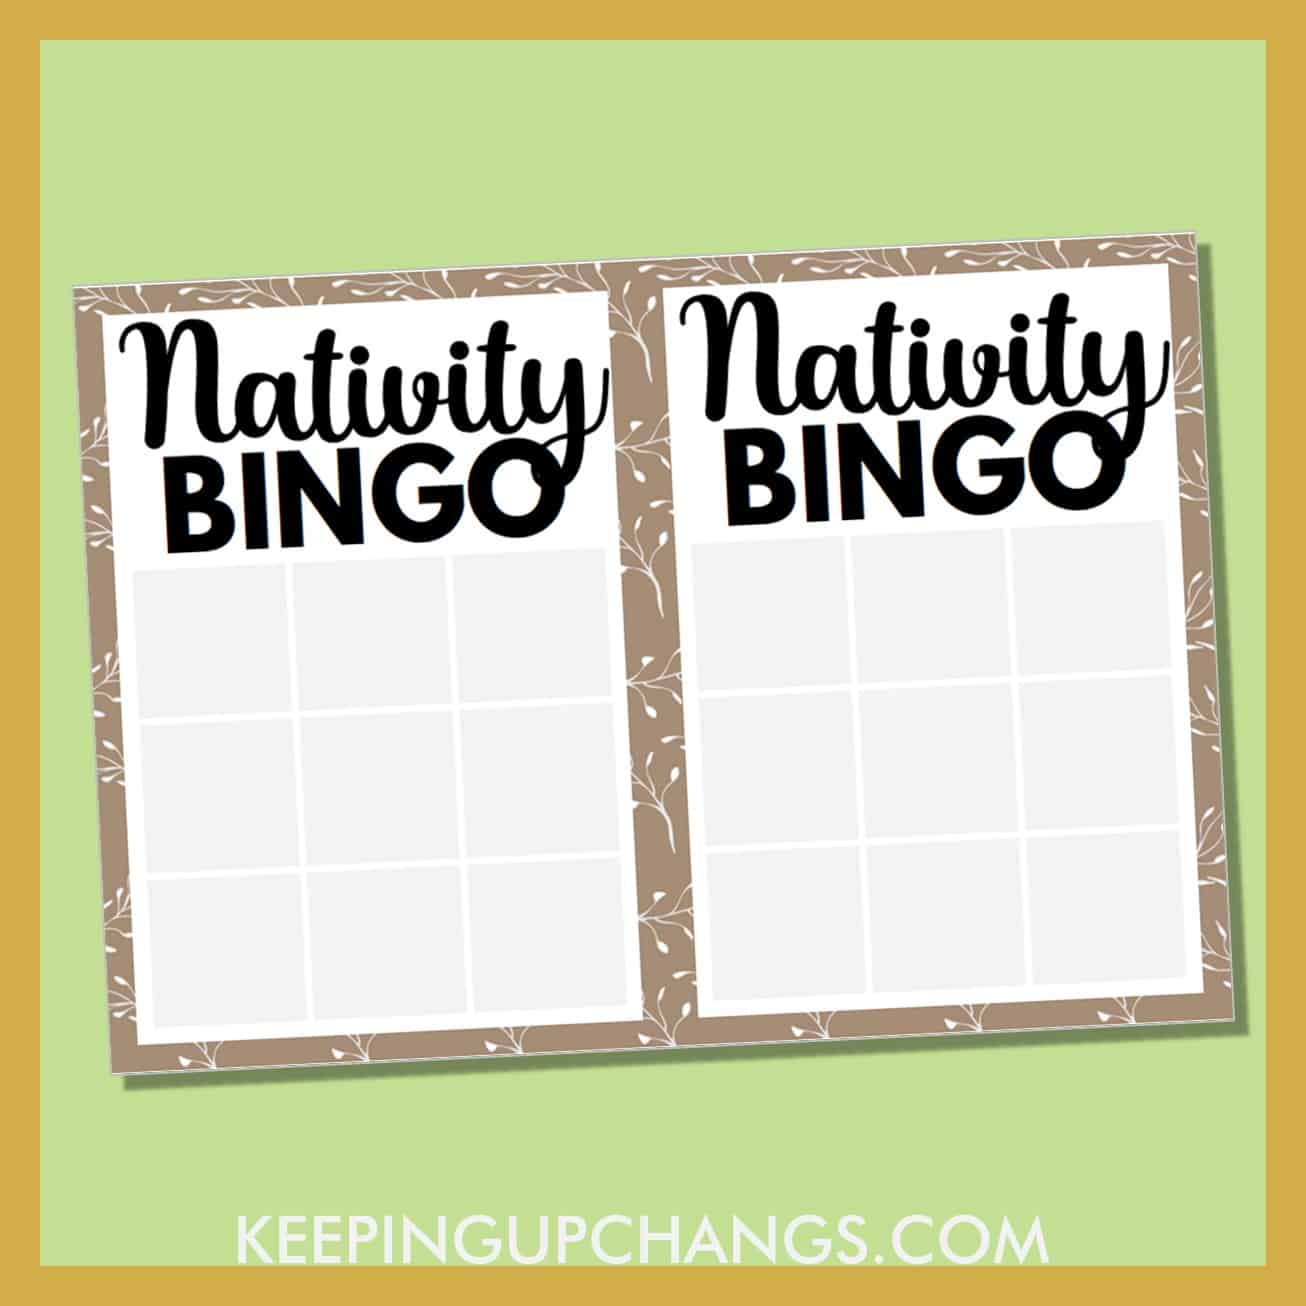 free bible nativity christmas bingo 3x3 grid game board blank template.